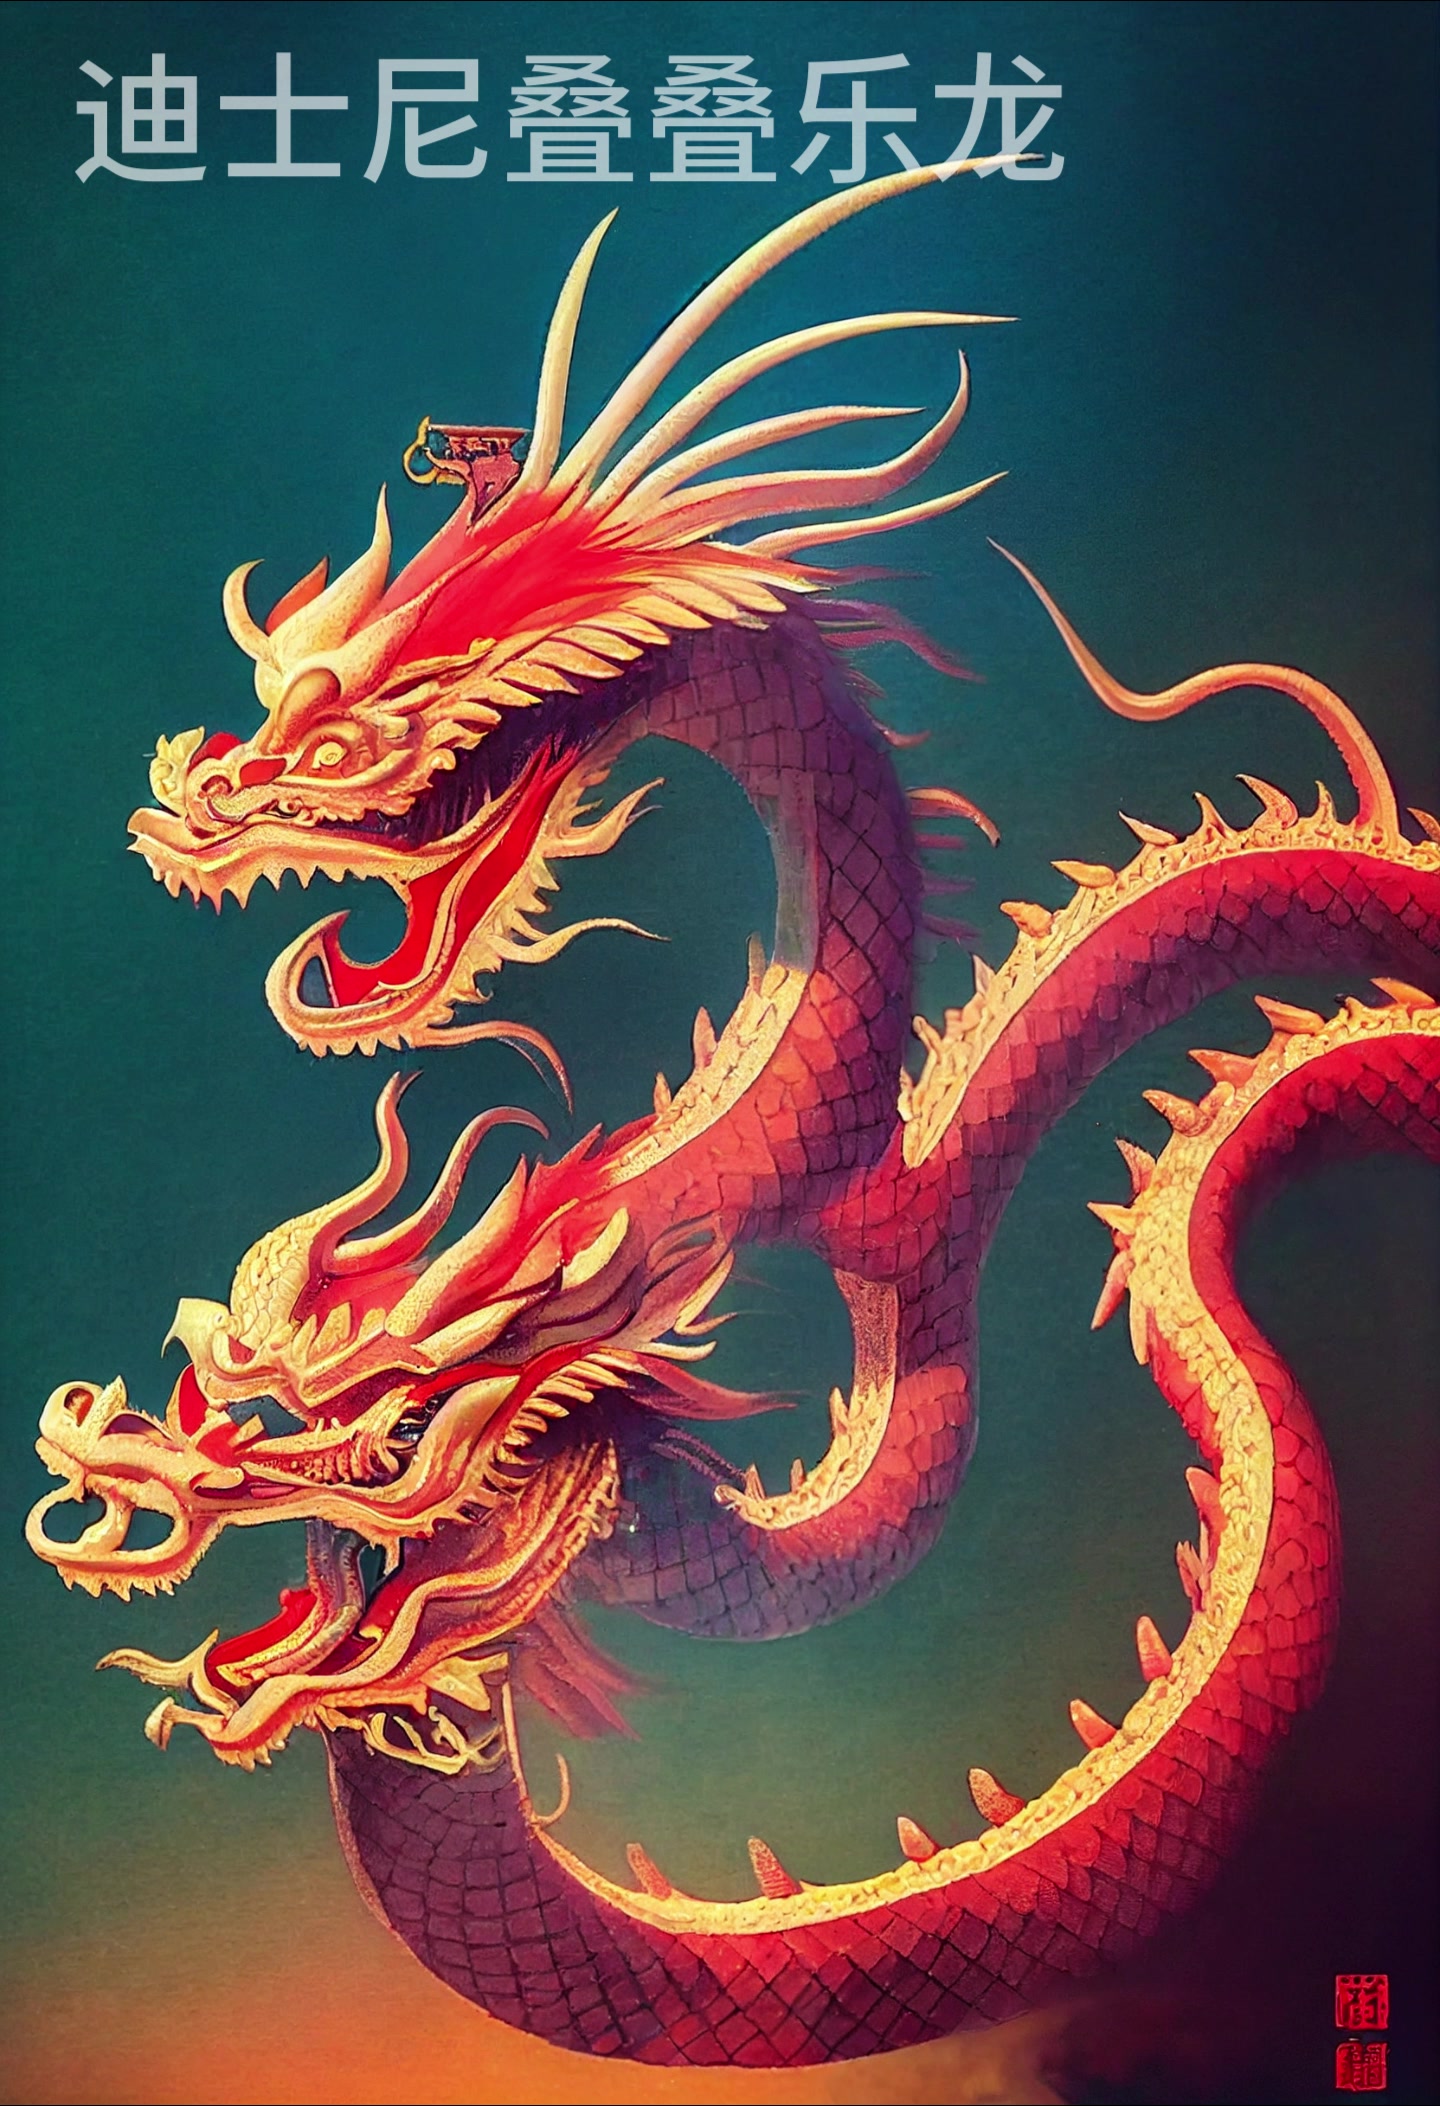 [ai画图] 中国龙× 叠叠乐龙√ 关键词chinese dragon 下的奇特生物